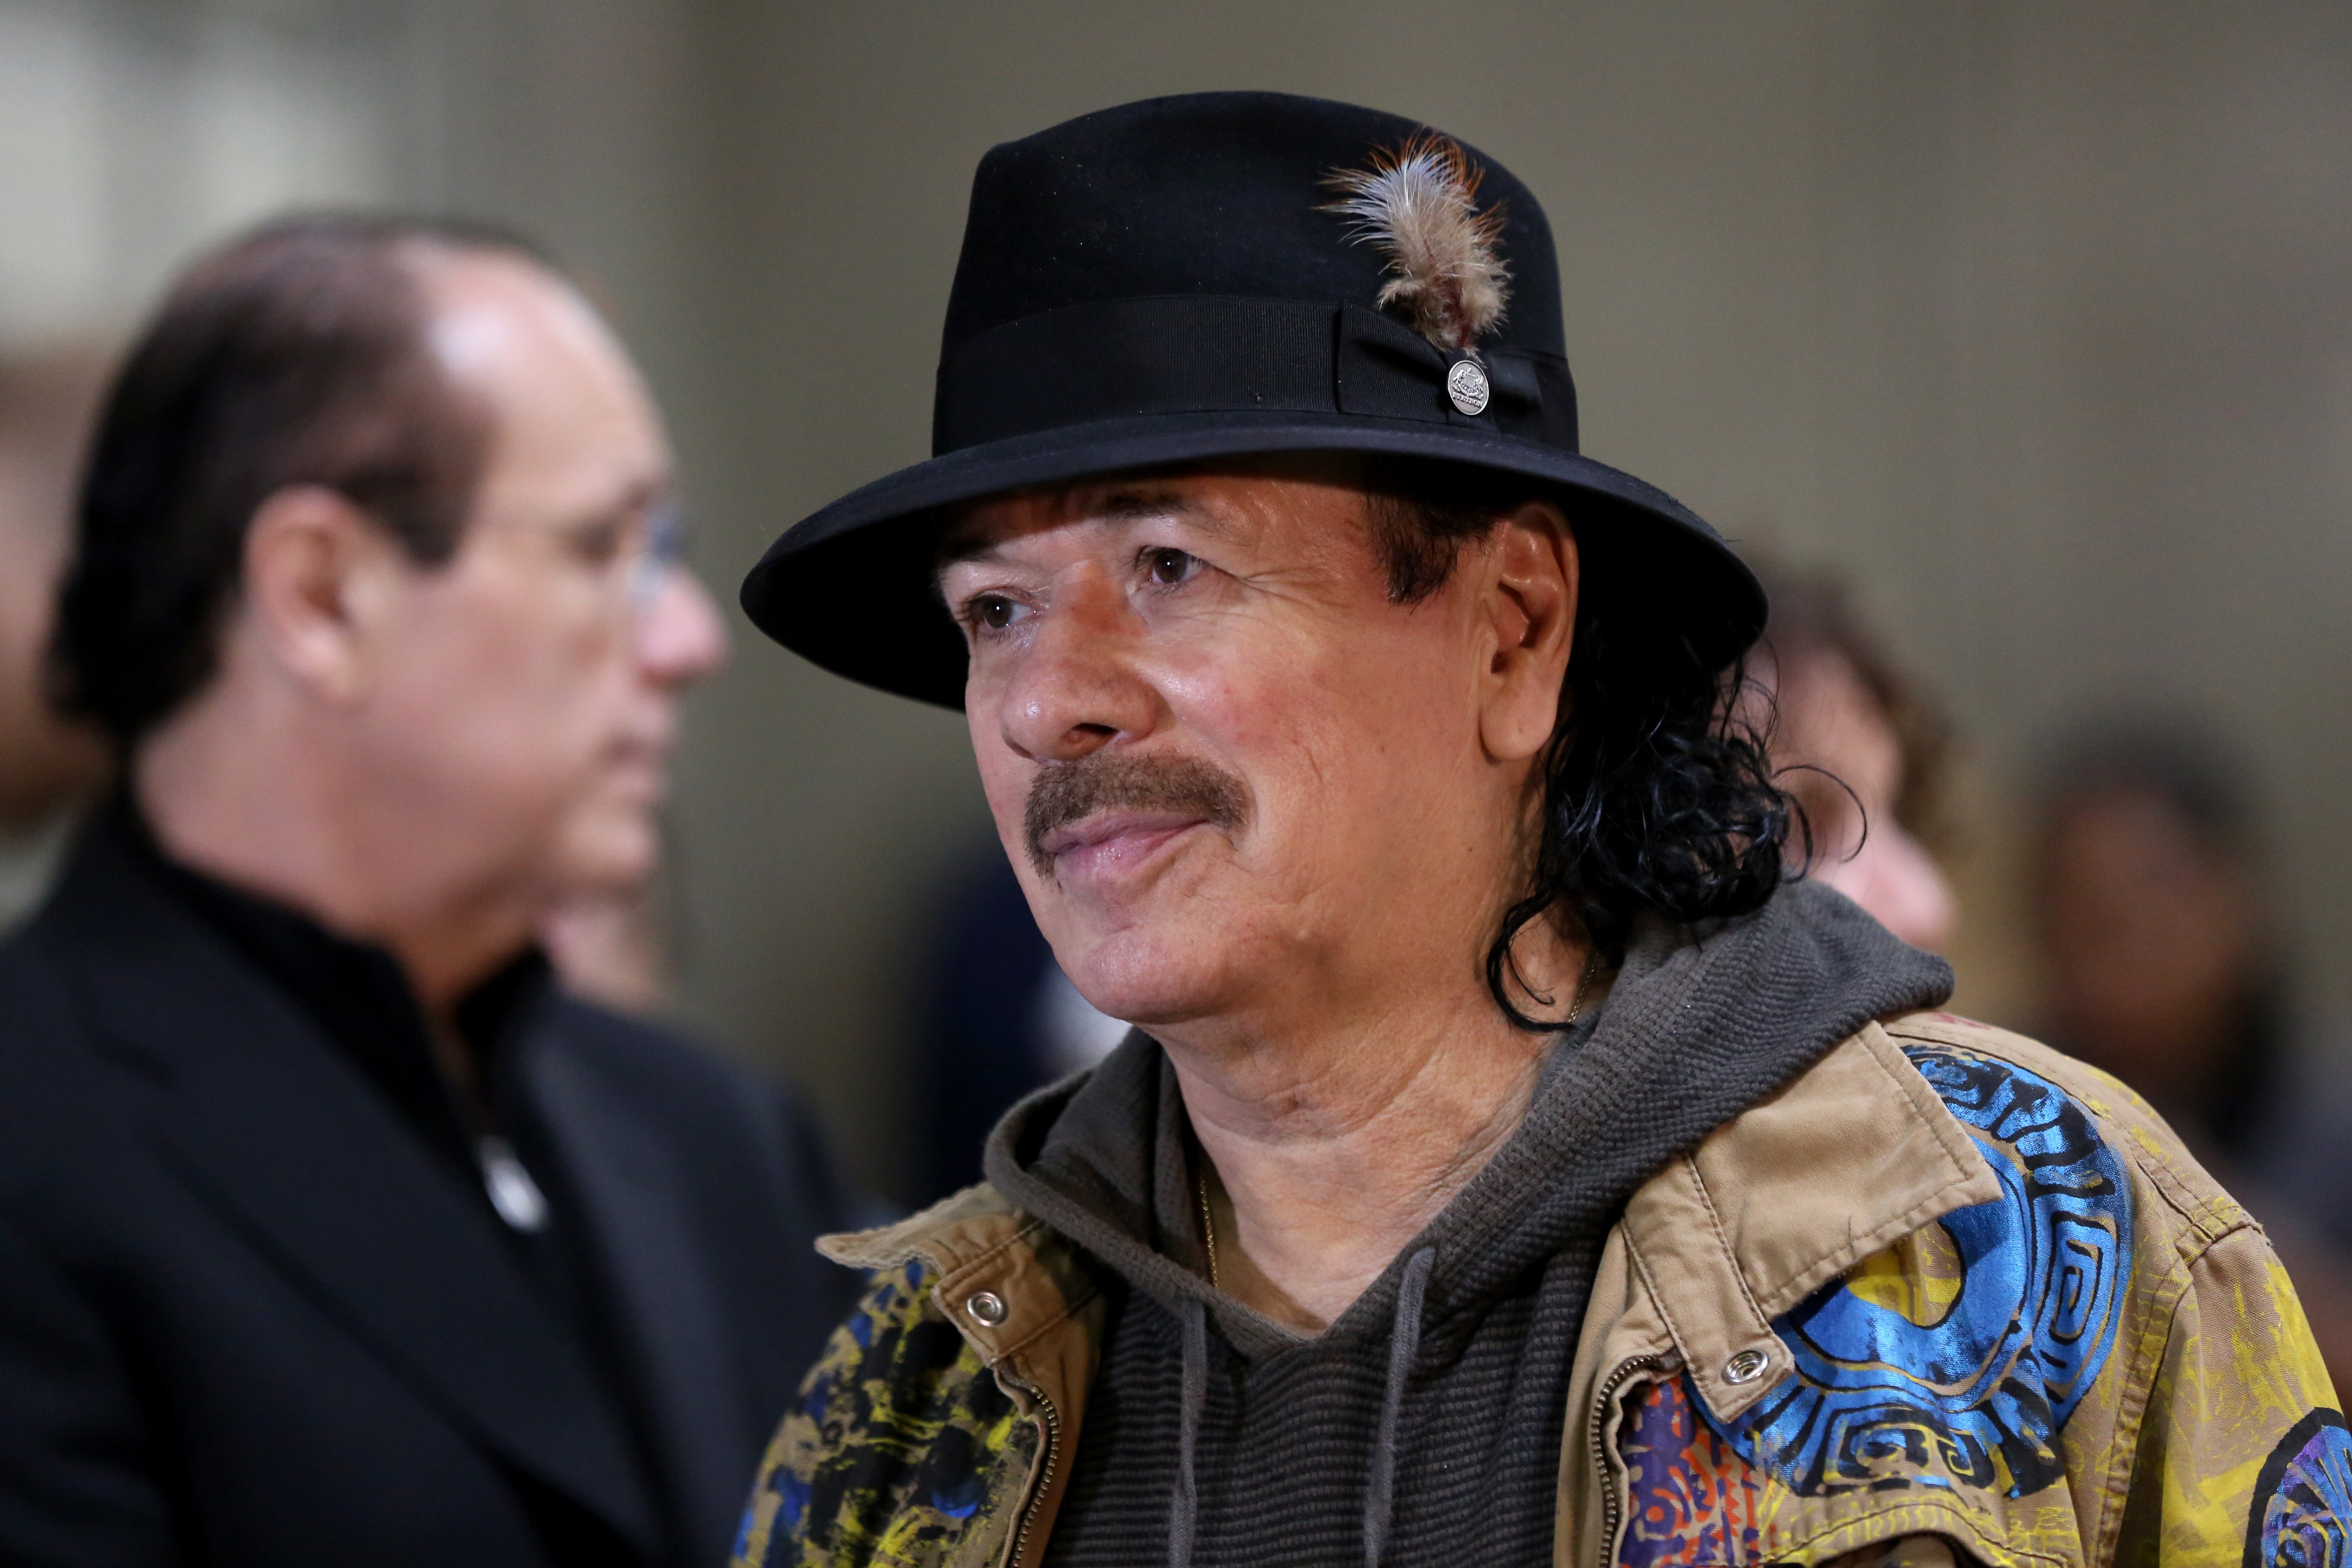 Carlos Santana in Las Vegas 2019. | Source: Getty Images